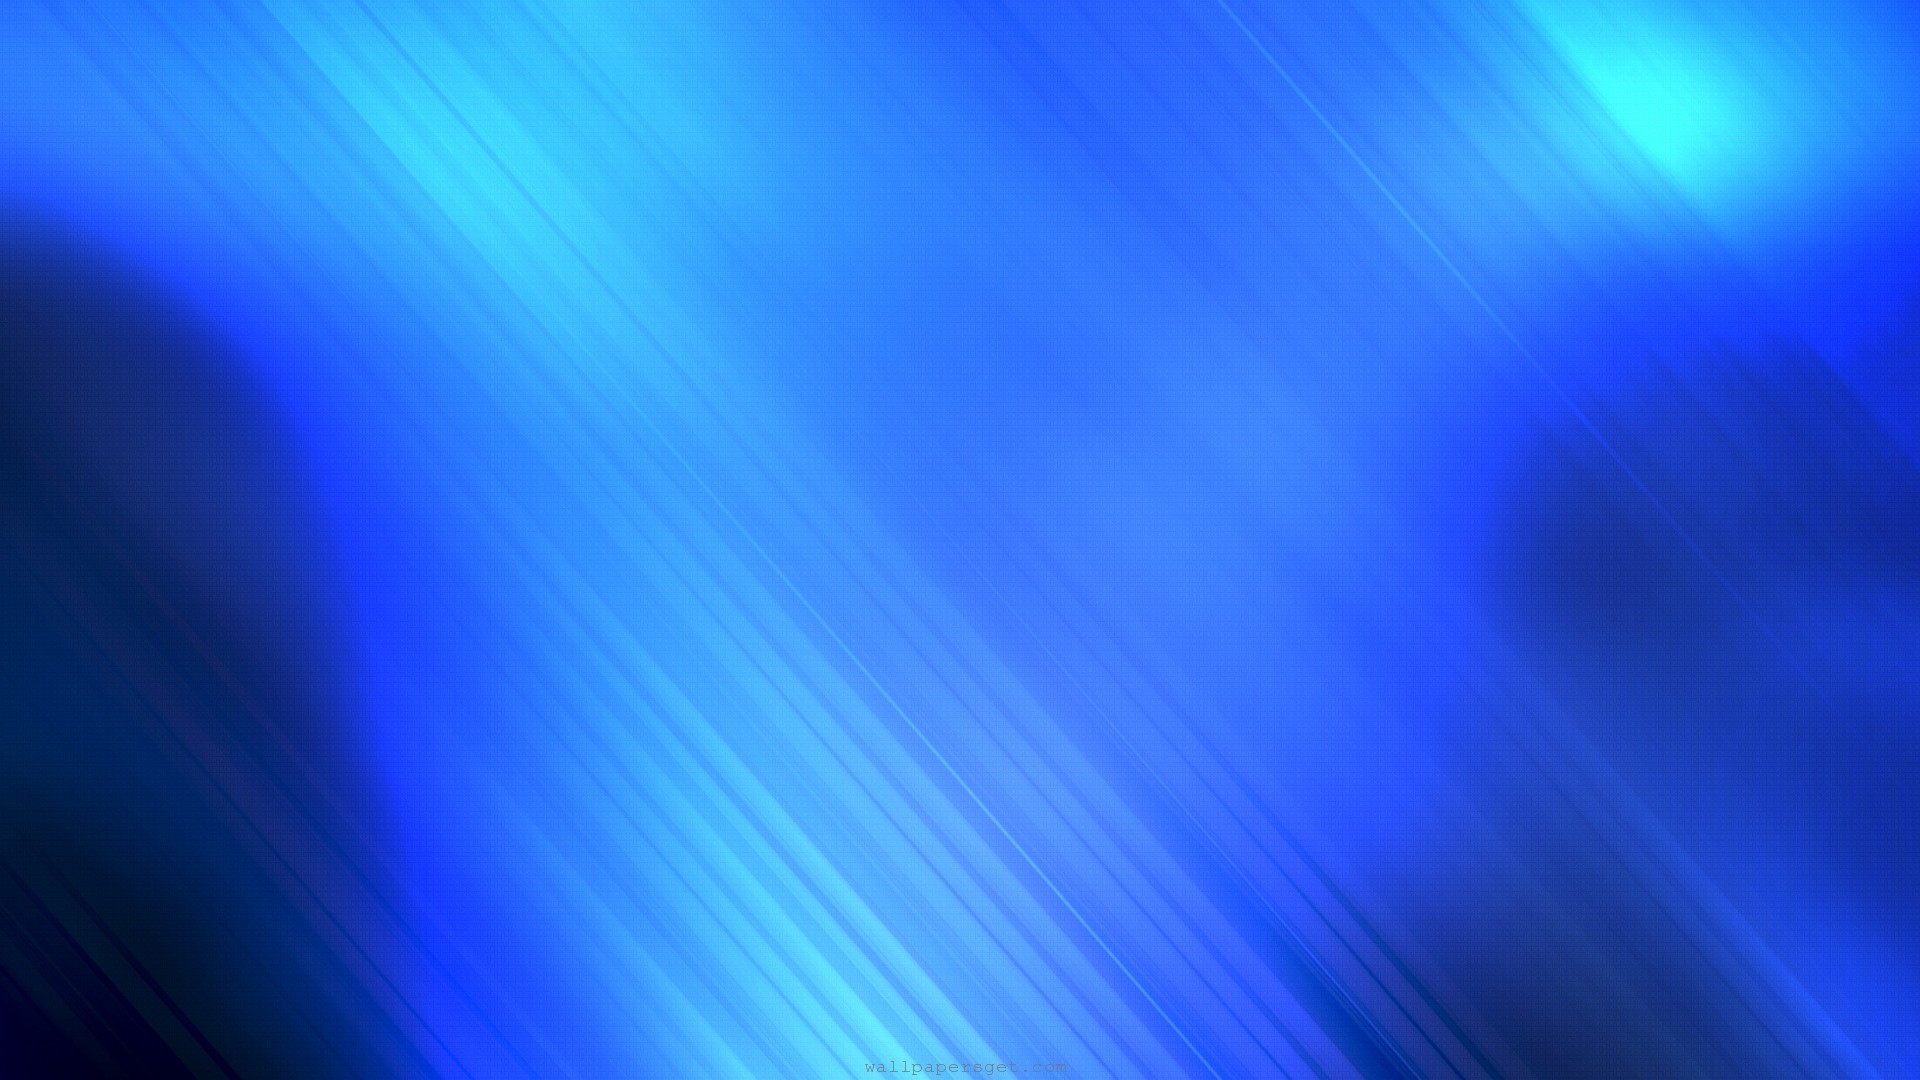 1920x1080 Cool Blue Wallpaper 1080p | Designs | Pinterest | Blue wallpapers and  Wallpaper